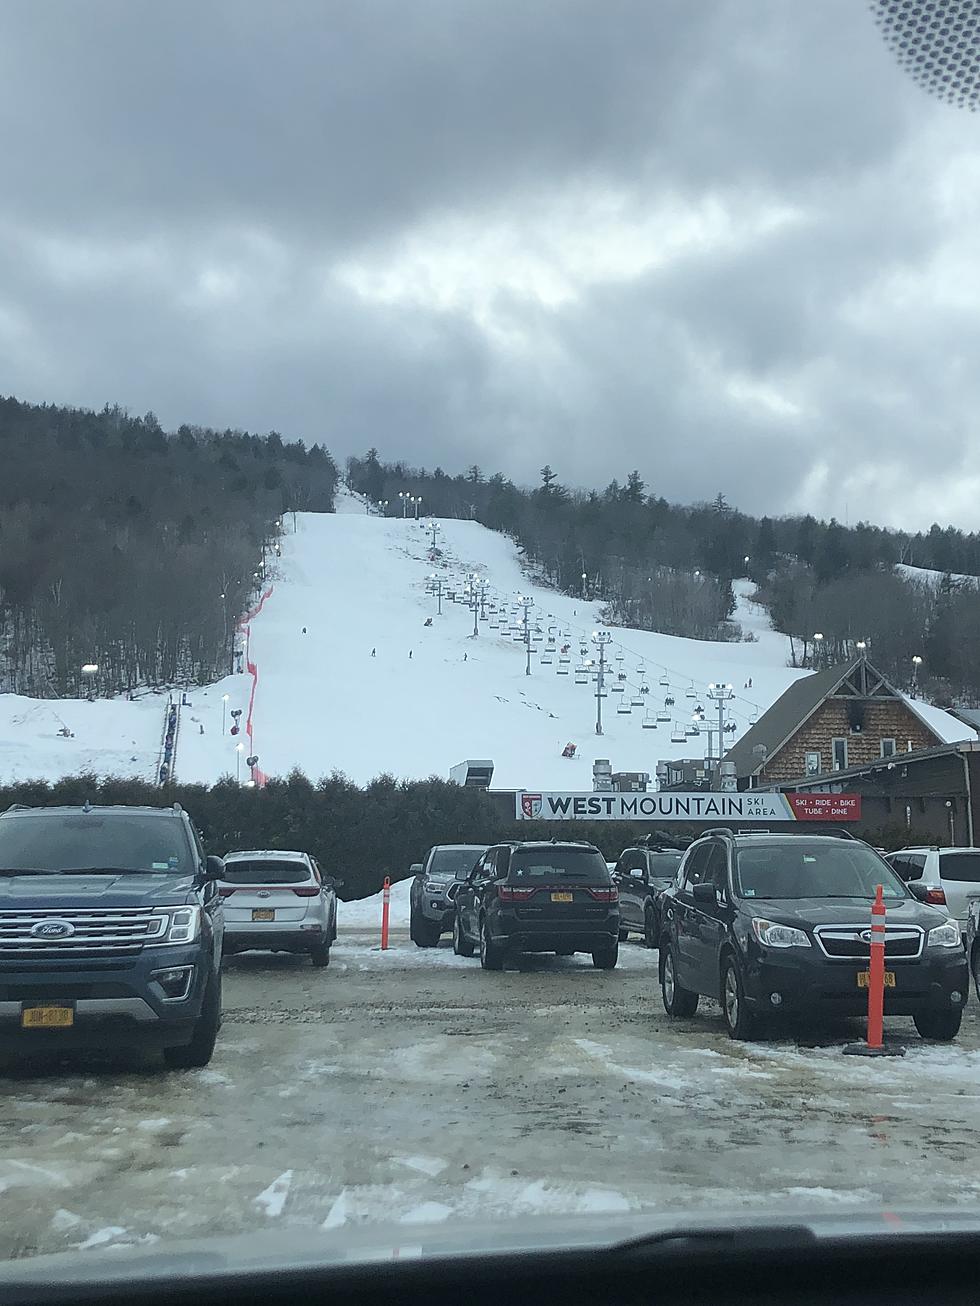 Popular North Country Ski Mountain Expanding to Slopeside Resort